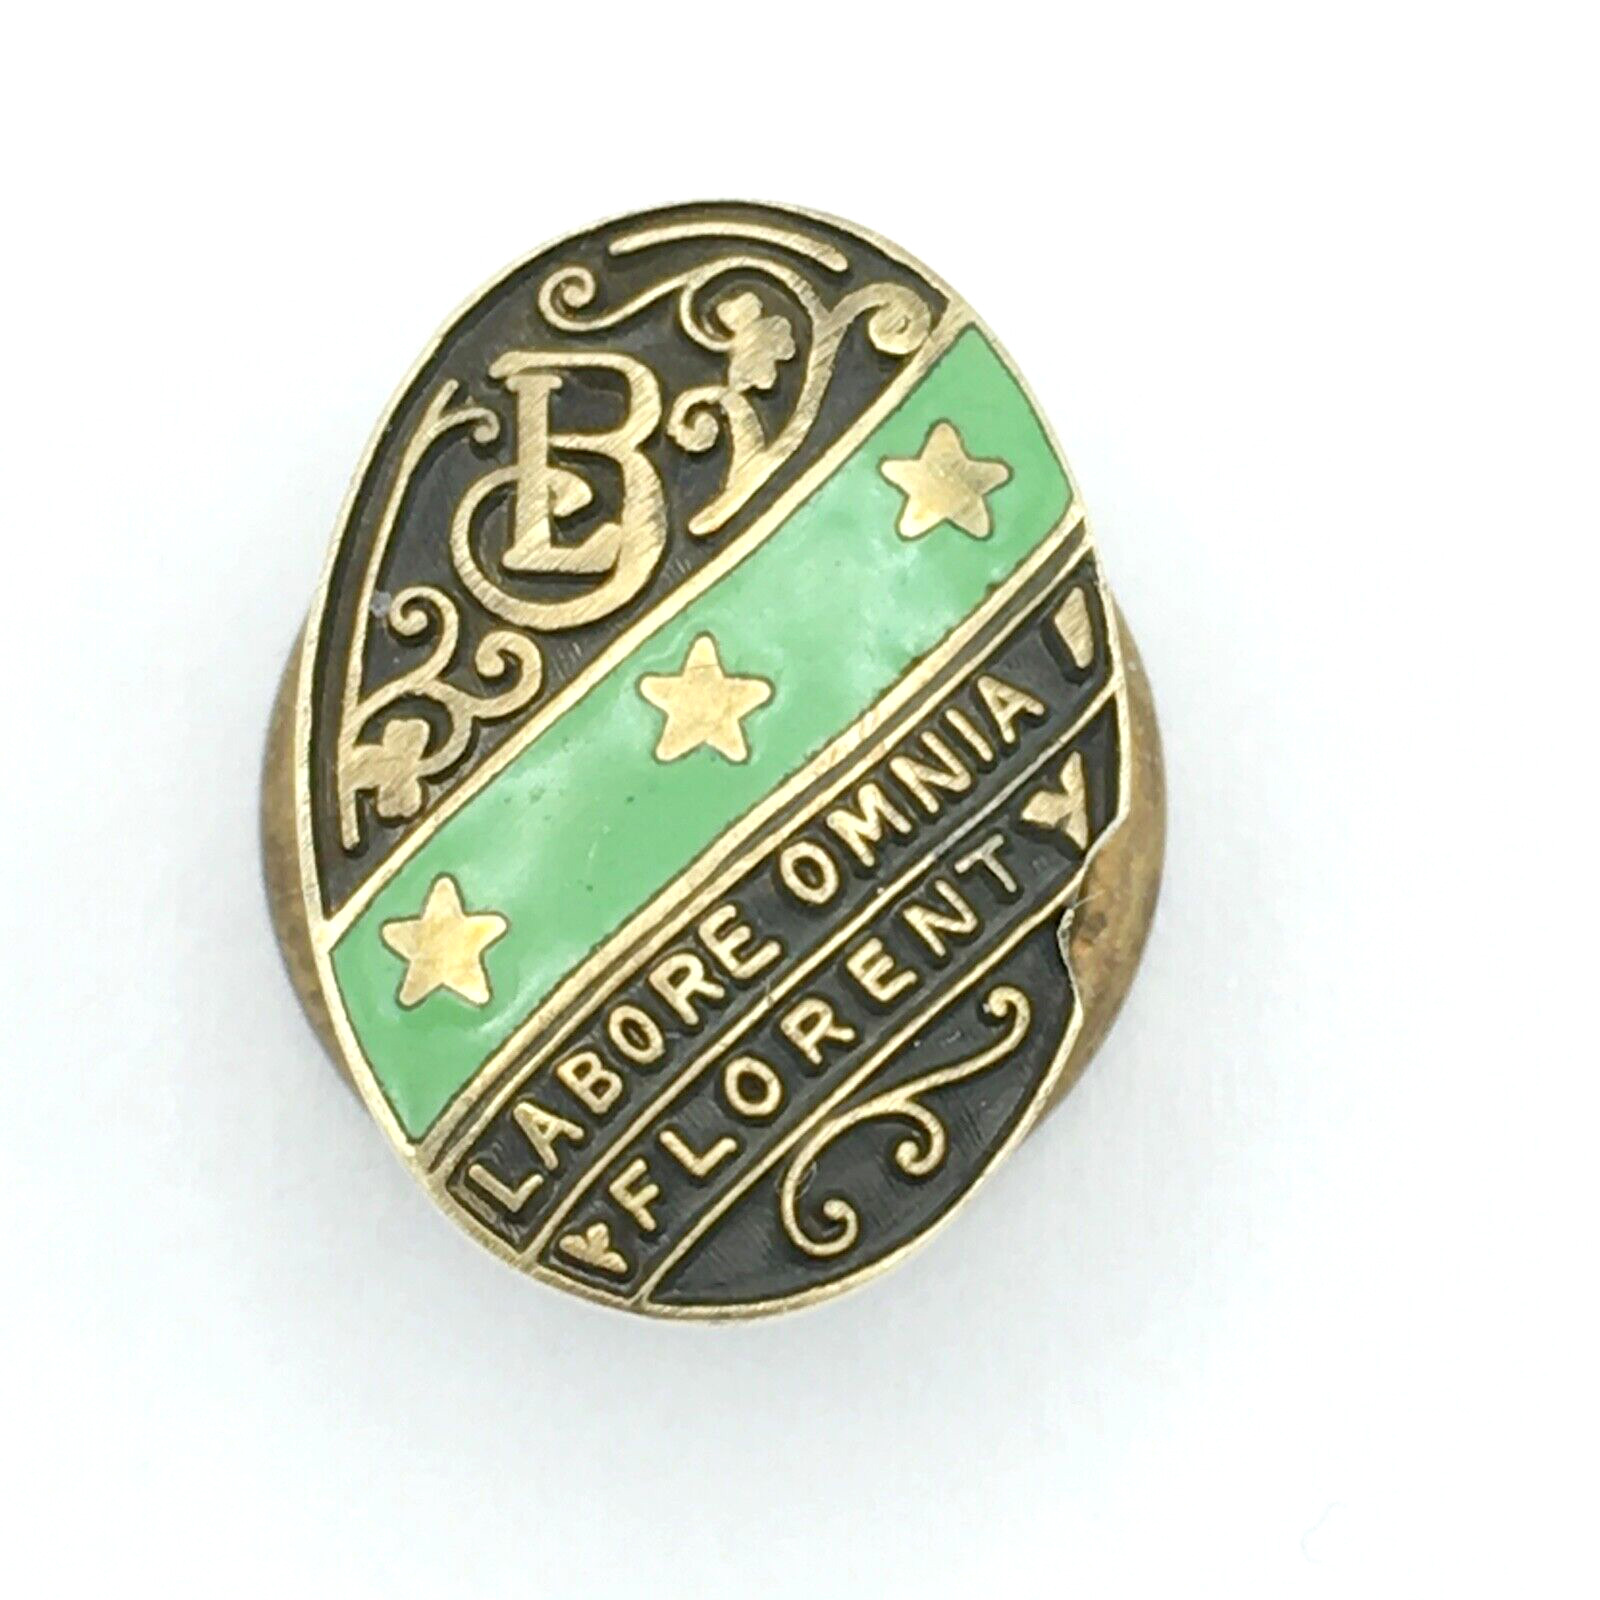 10K gold antique lapel pin w screw back - 1926 Labore Omnia Florent green enamel